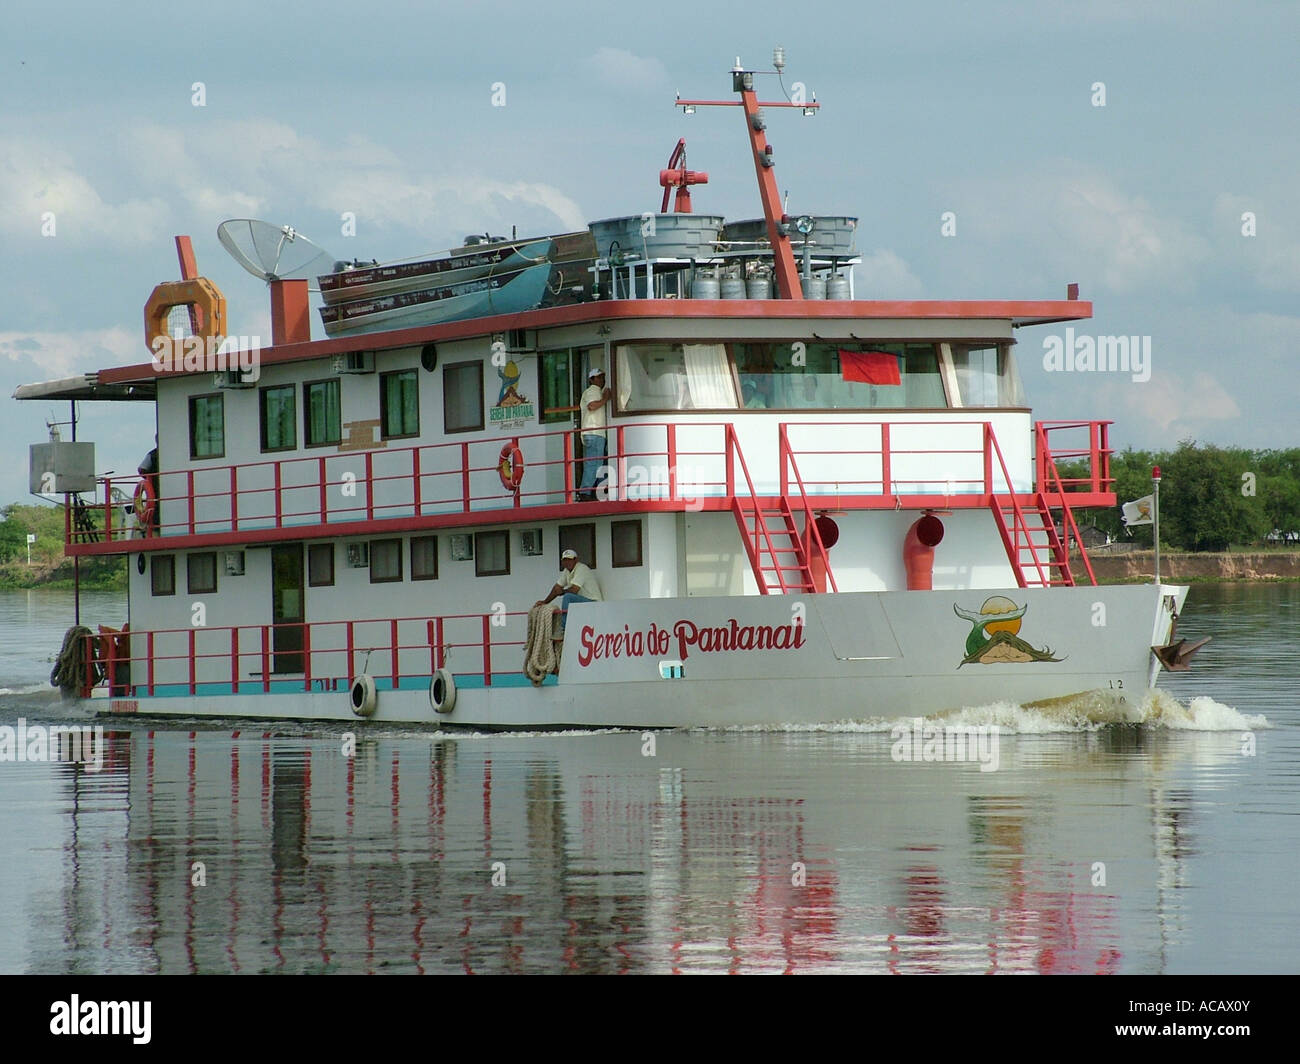 Typical Pantanal ship, Rio Paraguay Stock Photo